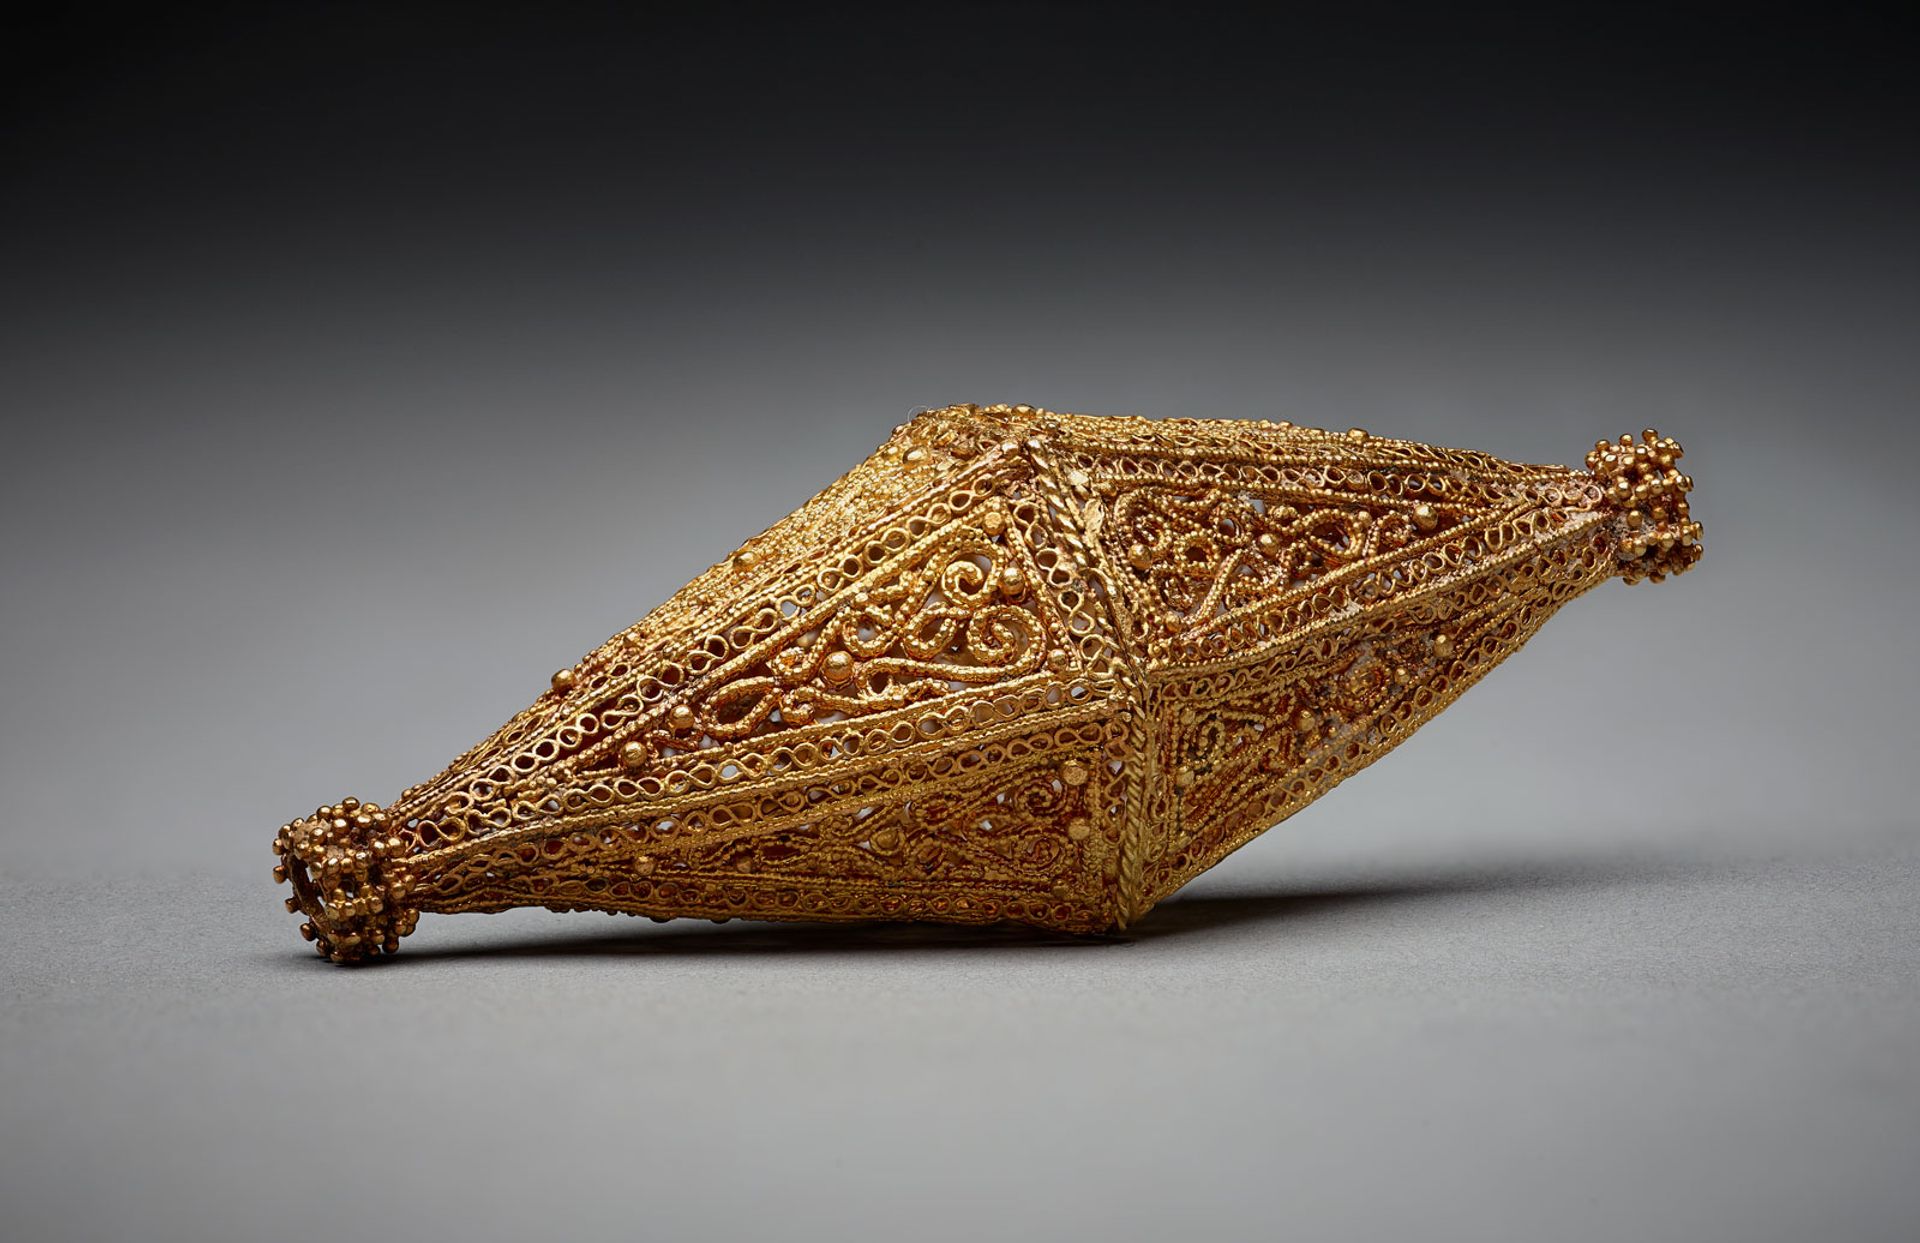 Bioconical bead, Egypt or Syria (10th-11th century) Aga Khan Museum, Toronto